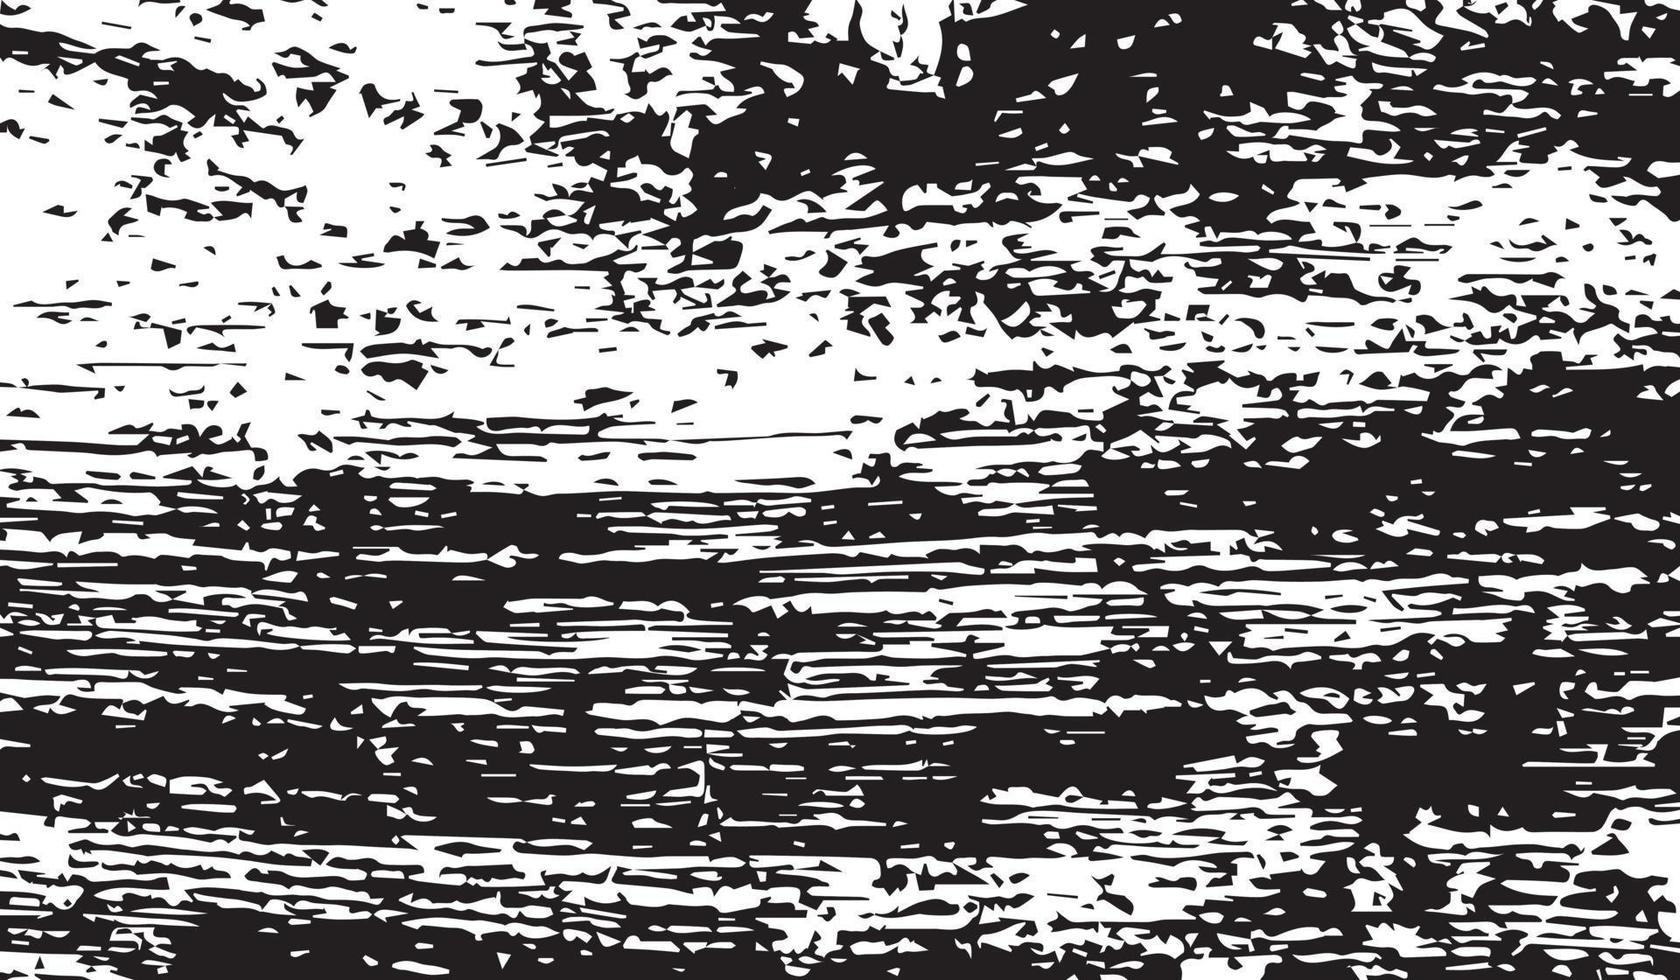 svart-vit abstrakt konsistens, vektor bakgrundsillustration